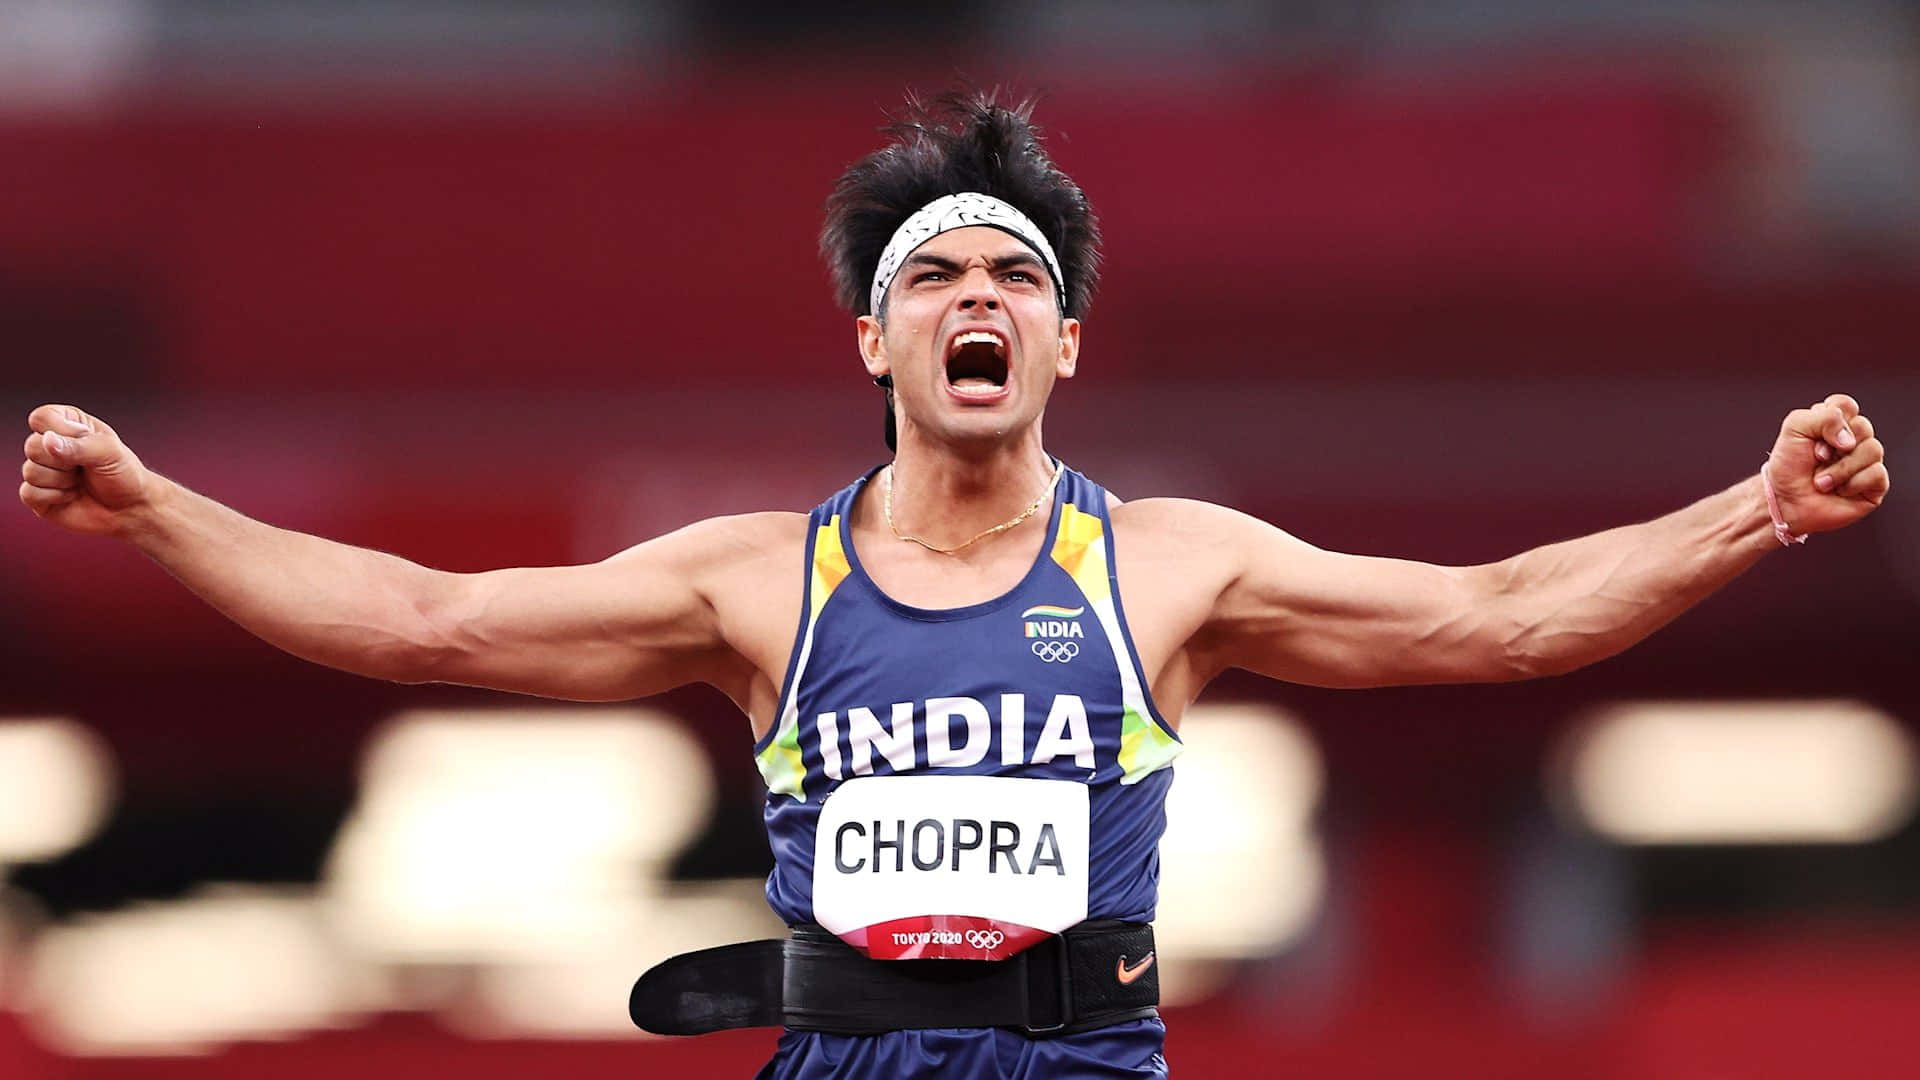 Neeraj Chopra - the champion javelin Thrower